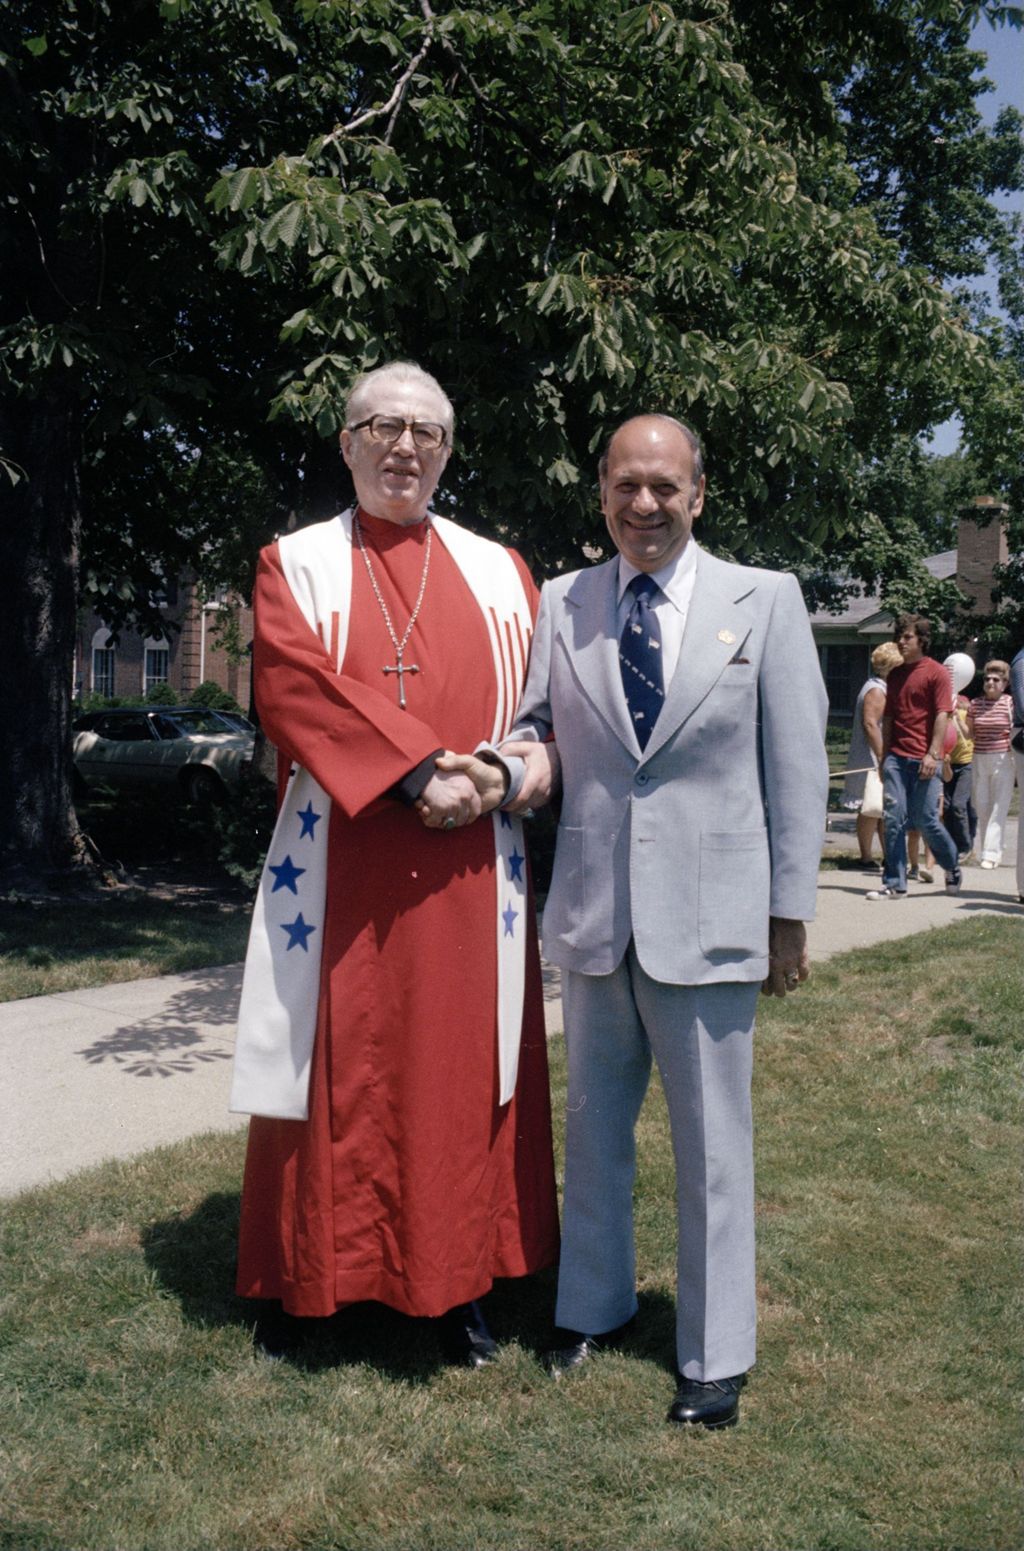 Sauganash Church pastor with Congressman Frank Annunzio